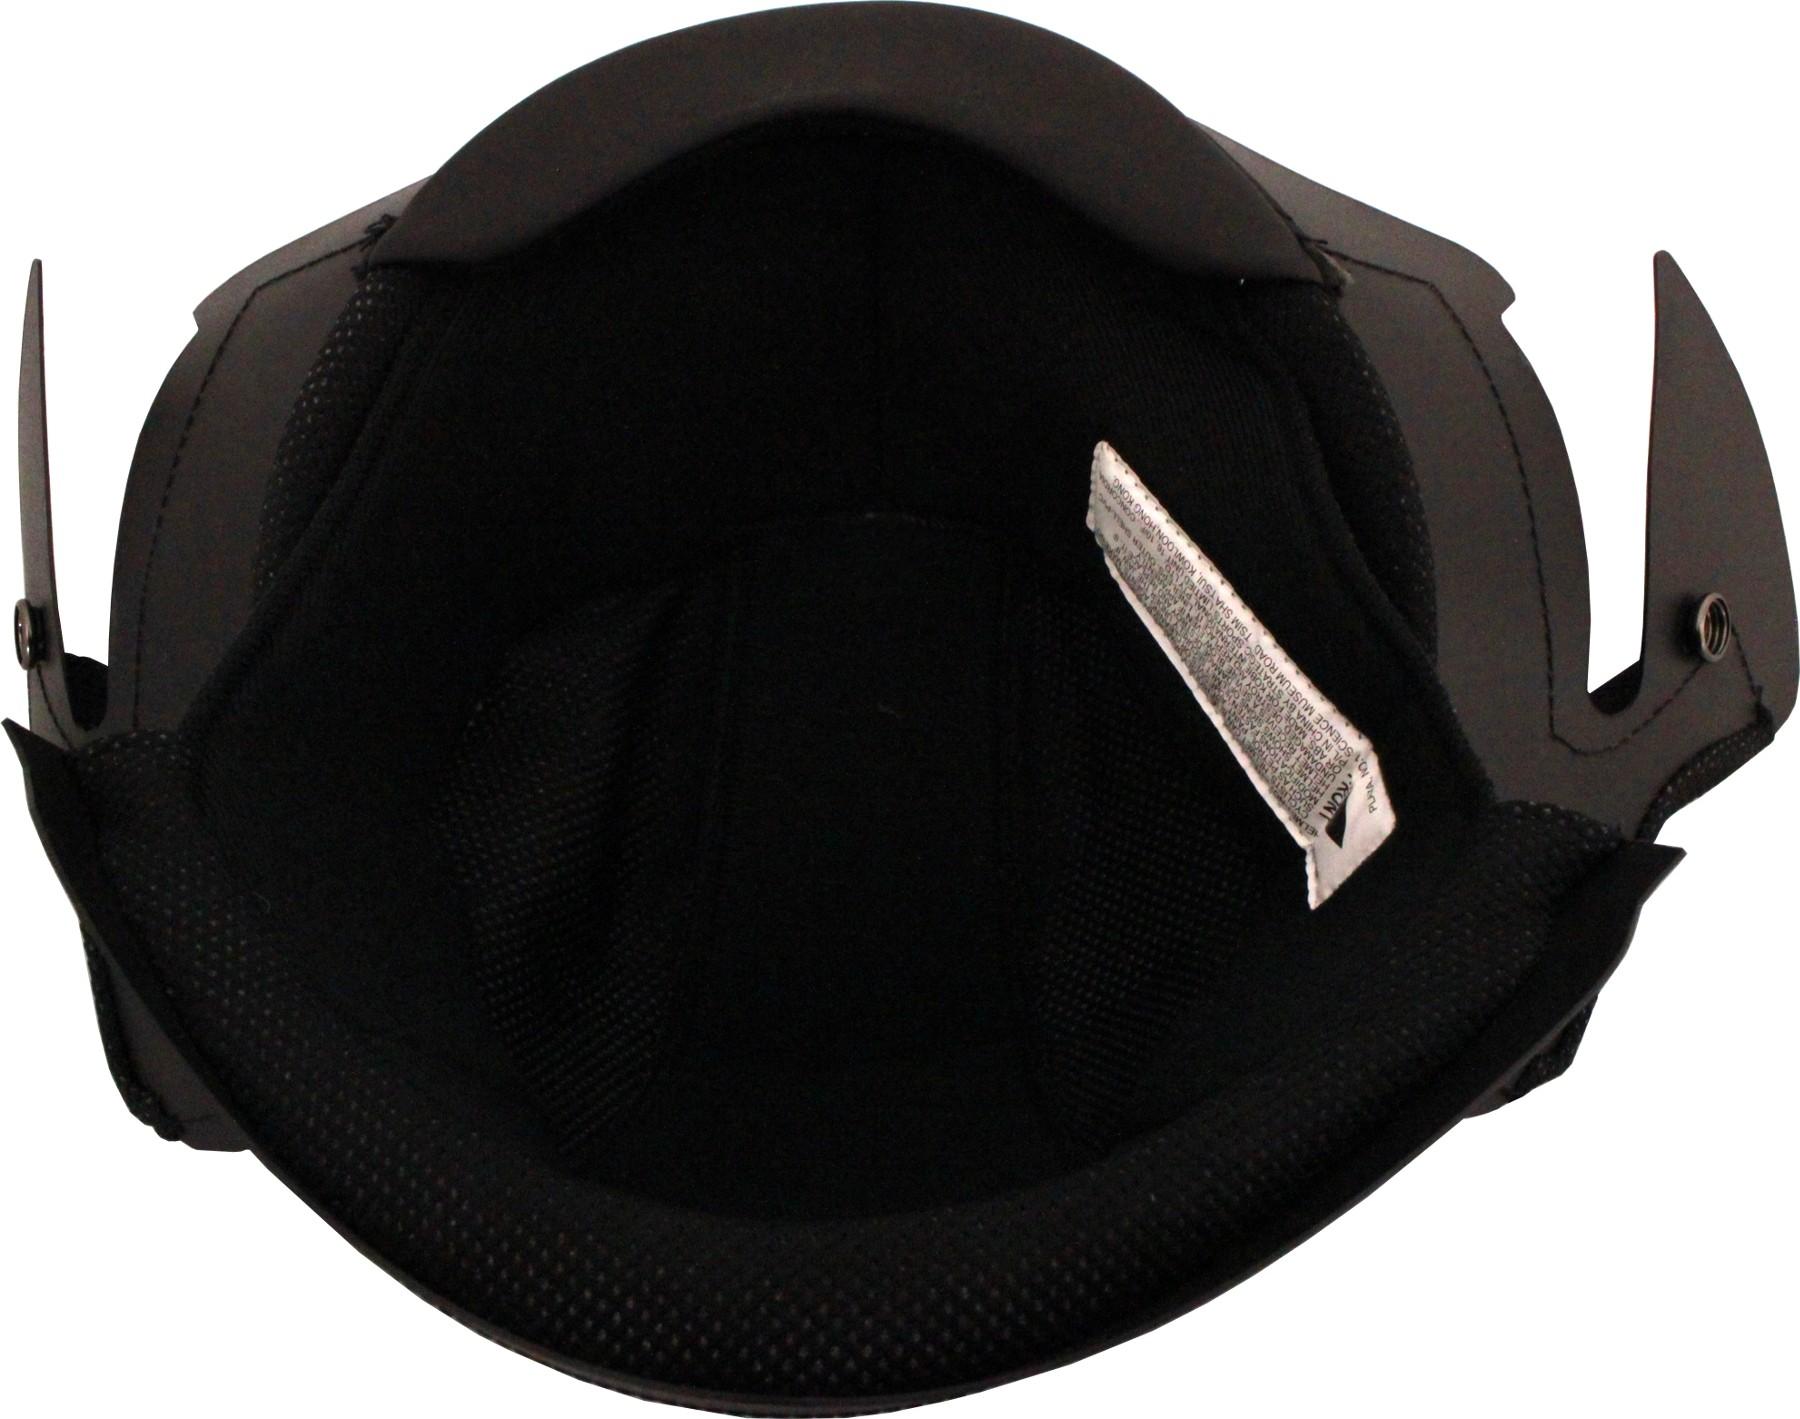 7 Idp Youth M1 Replacement Helmet Pad Kit - Black